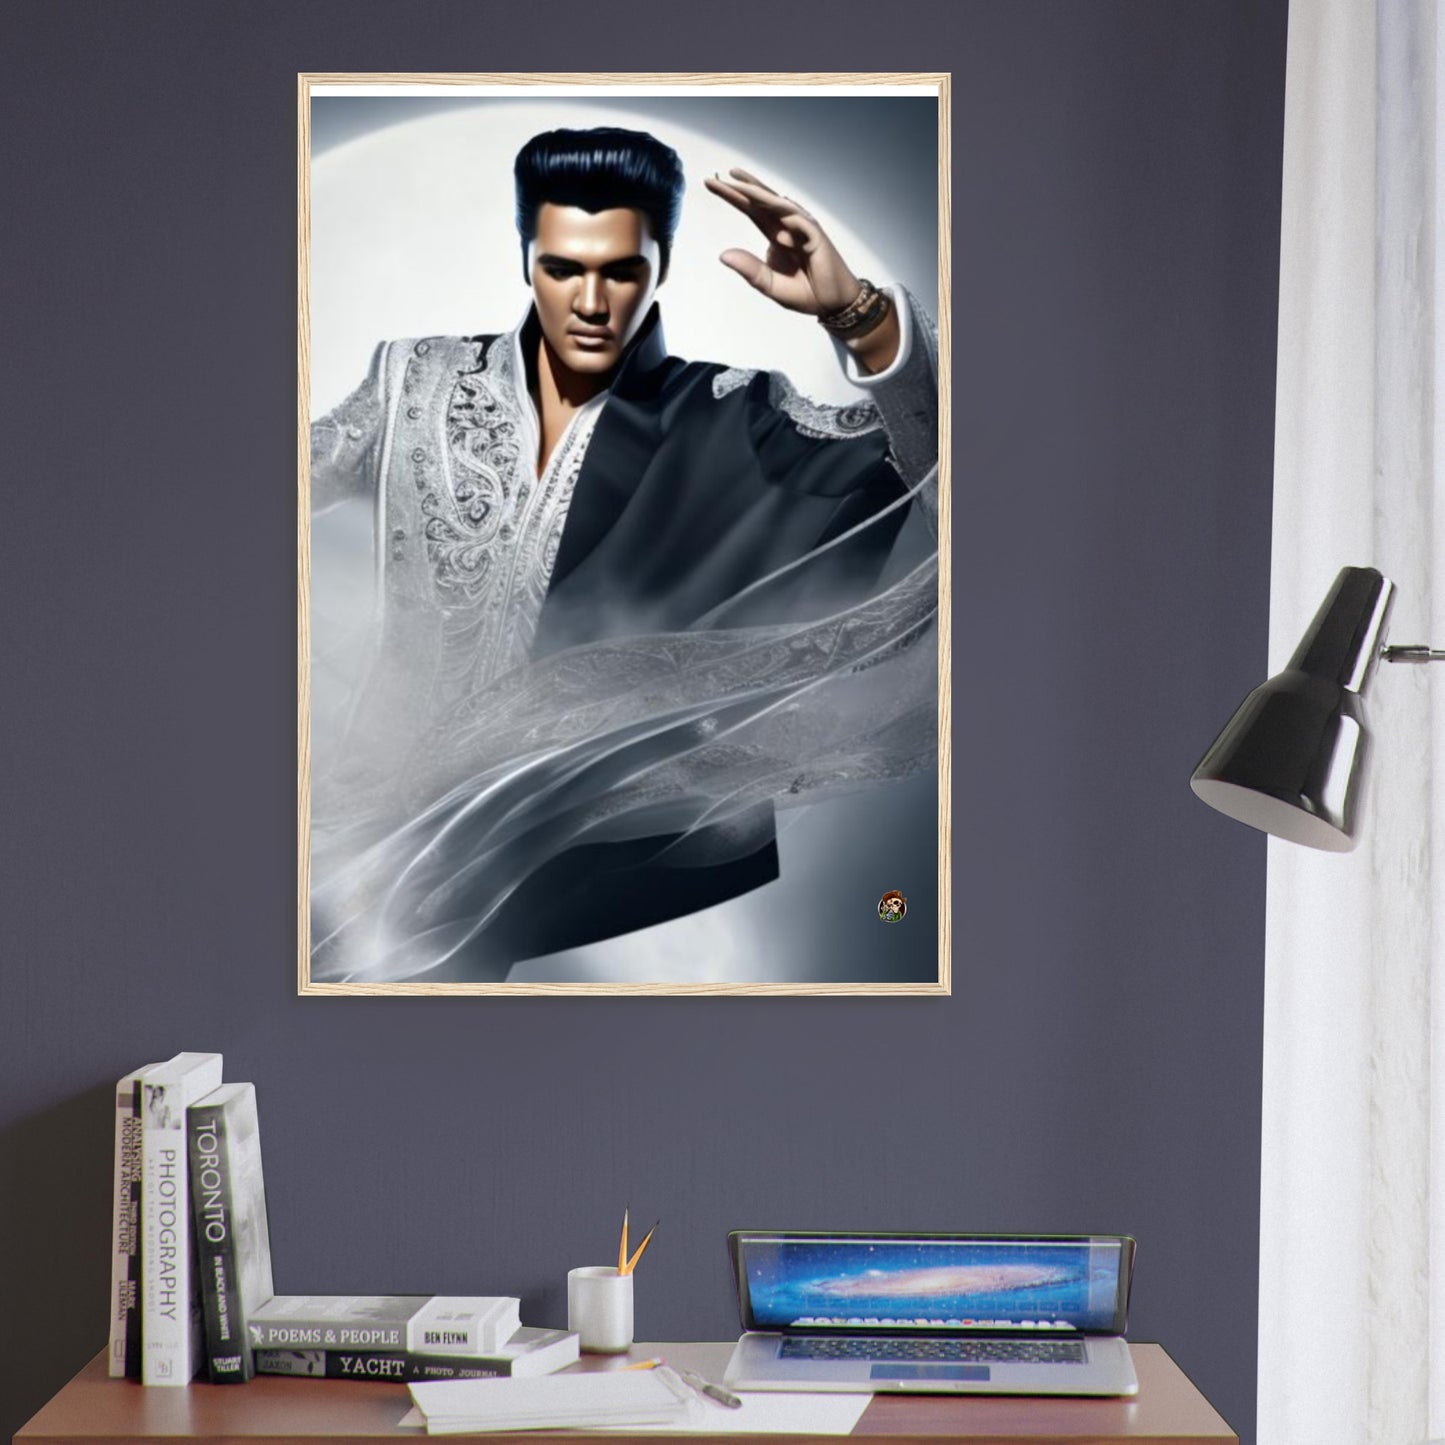 Elvis Presley Premium Semi-Glossy Wooden Framed Poster. created by Ötzi Frosty